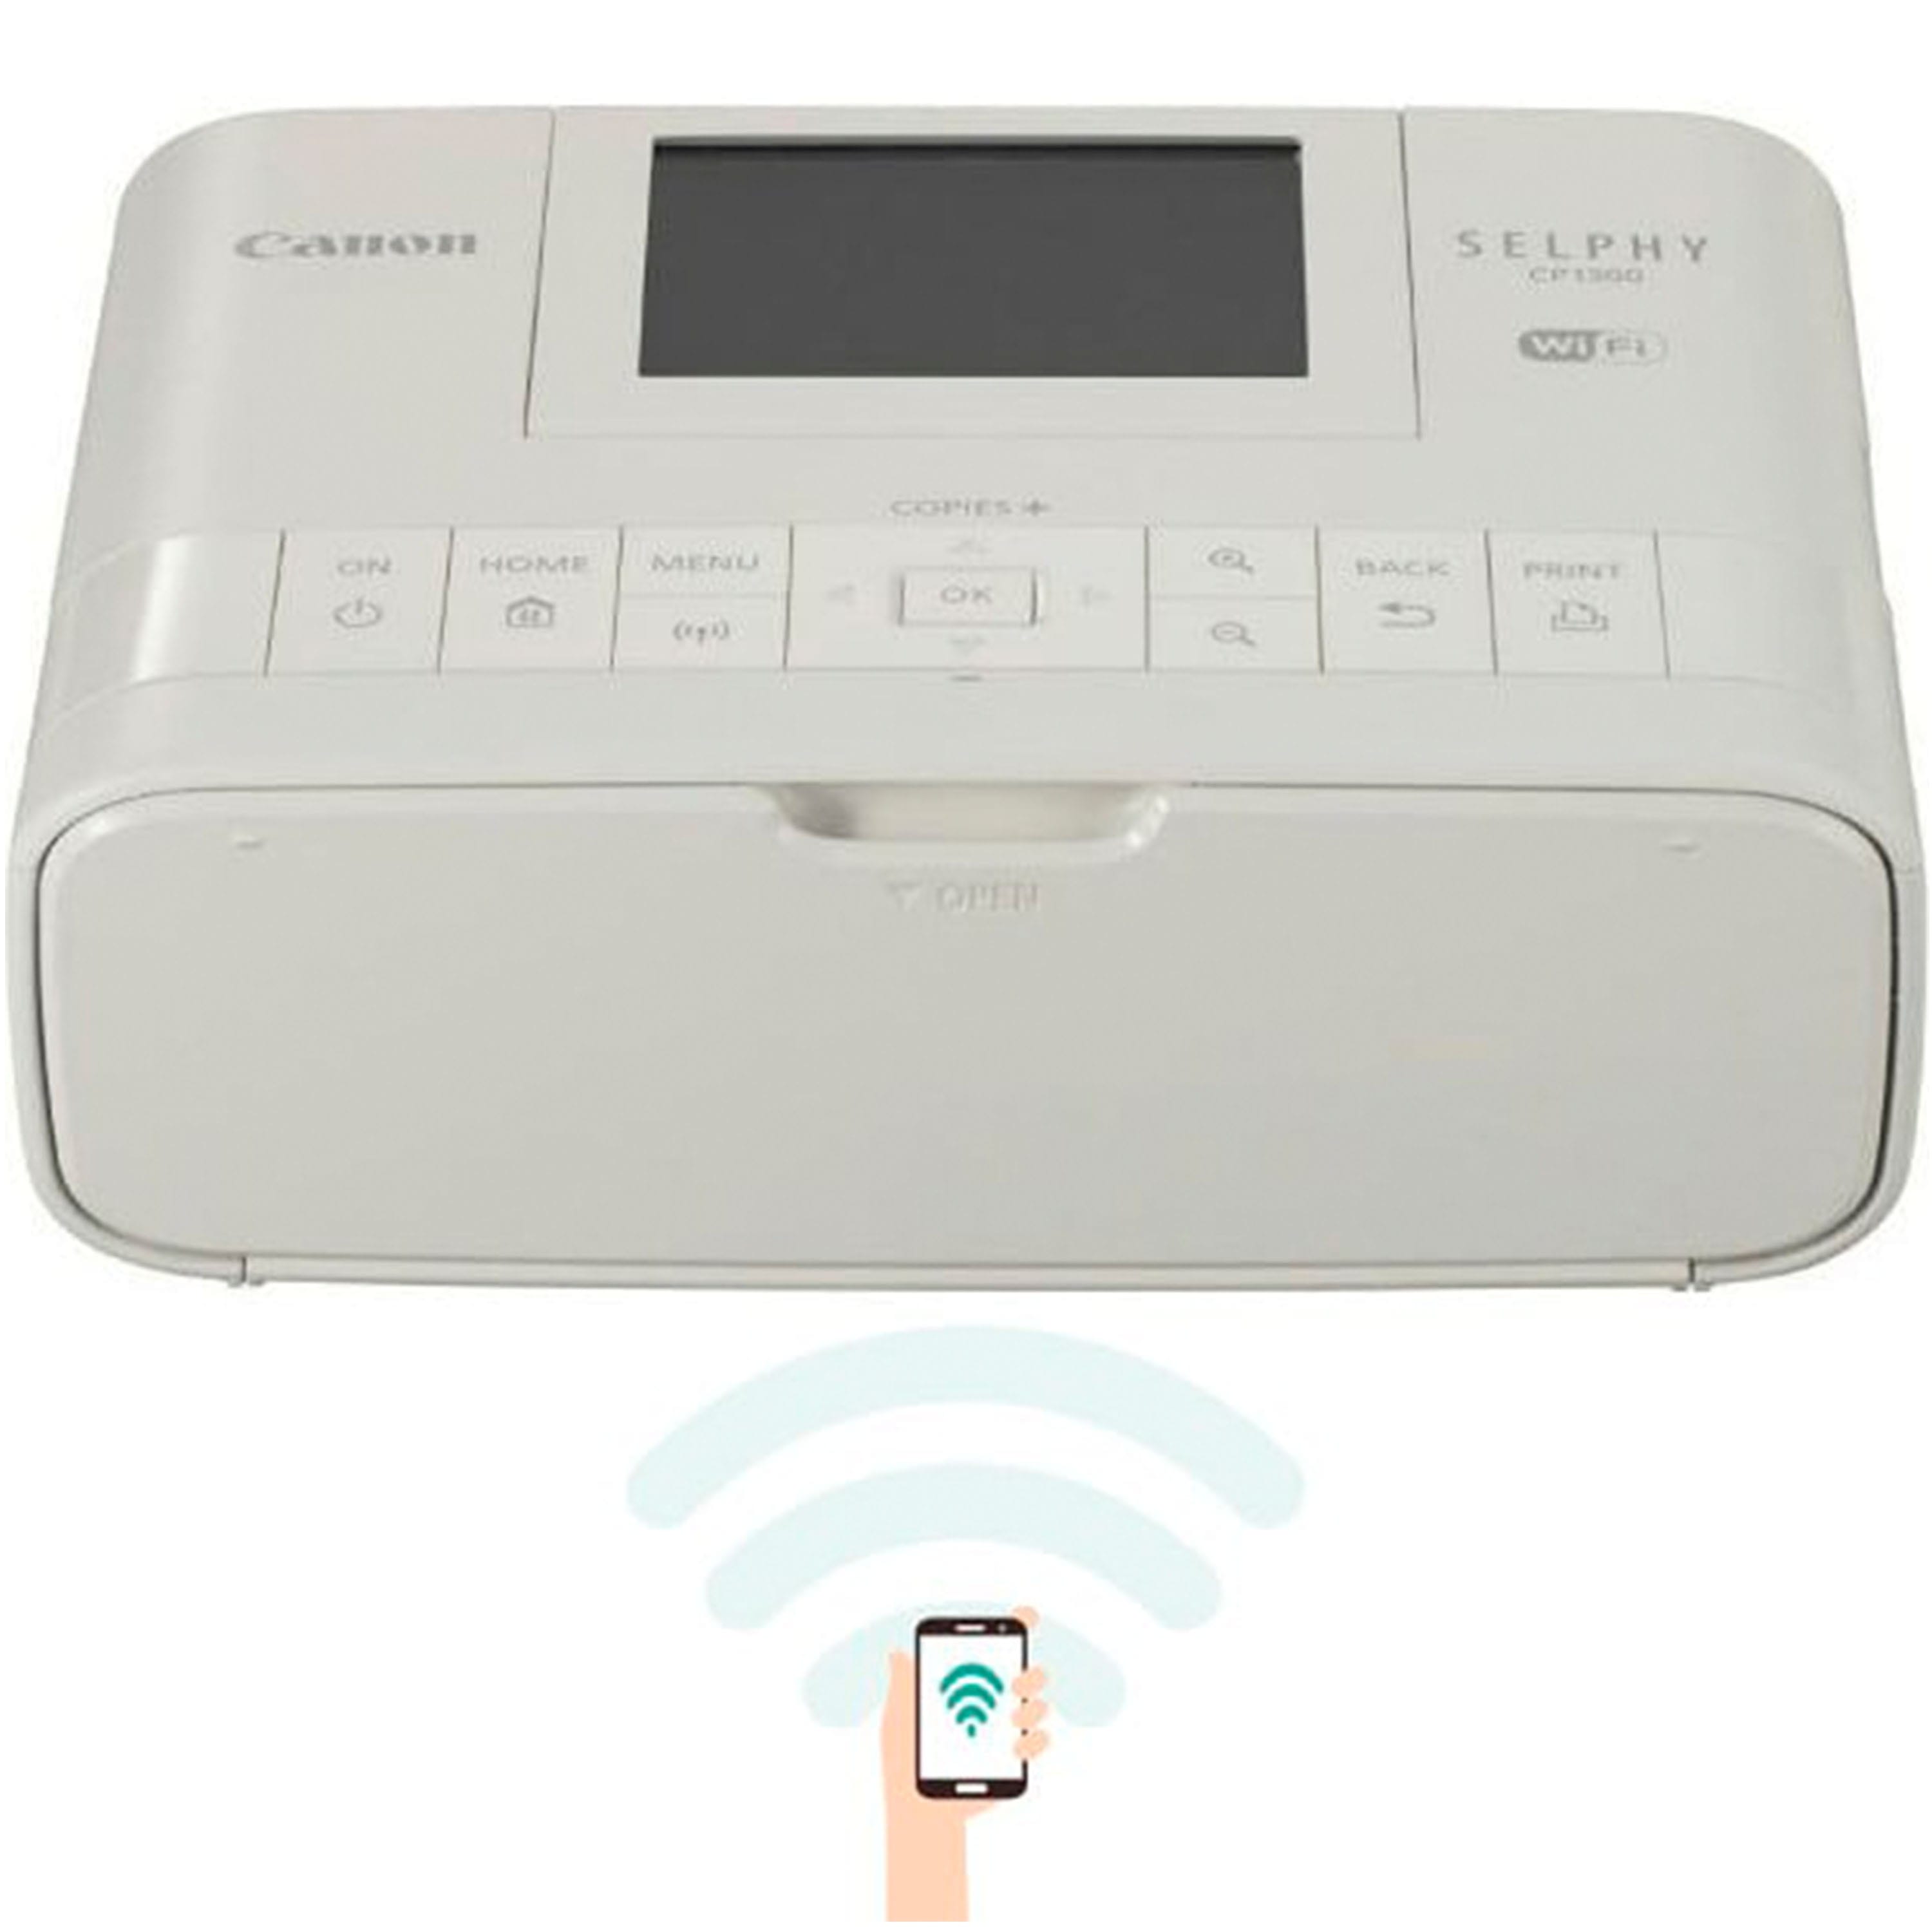 CANON - Imprimante thermique Selphy CP1300 blanche - Tirages 10x15cm  - Ecran LCD inclinable de 8,1cm - Impression Wifi direct Smartphone